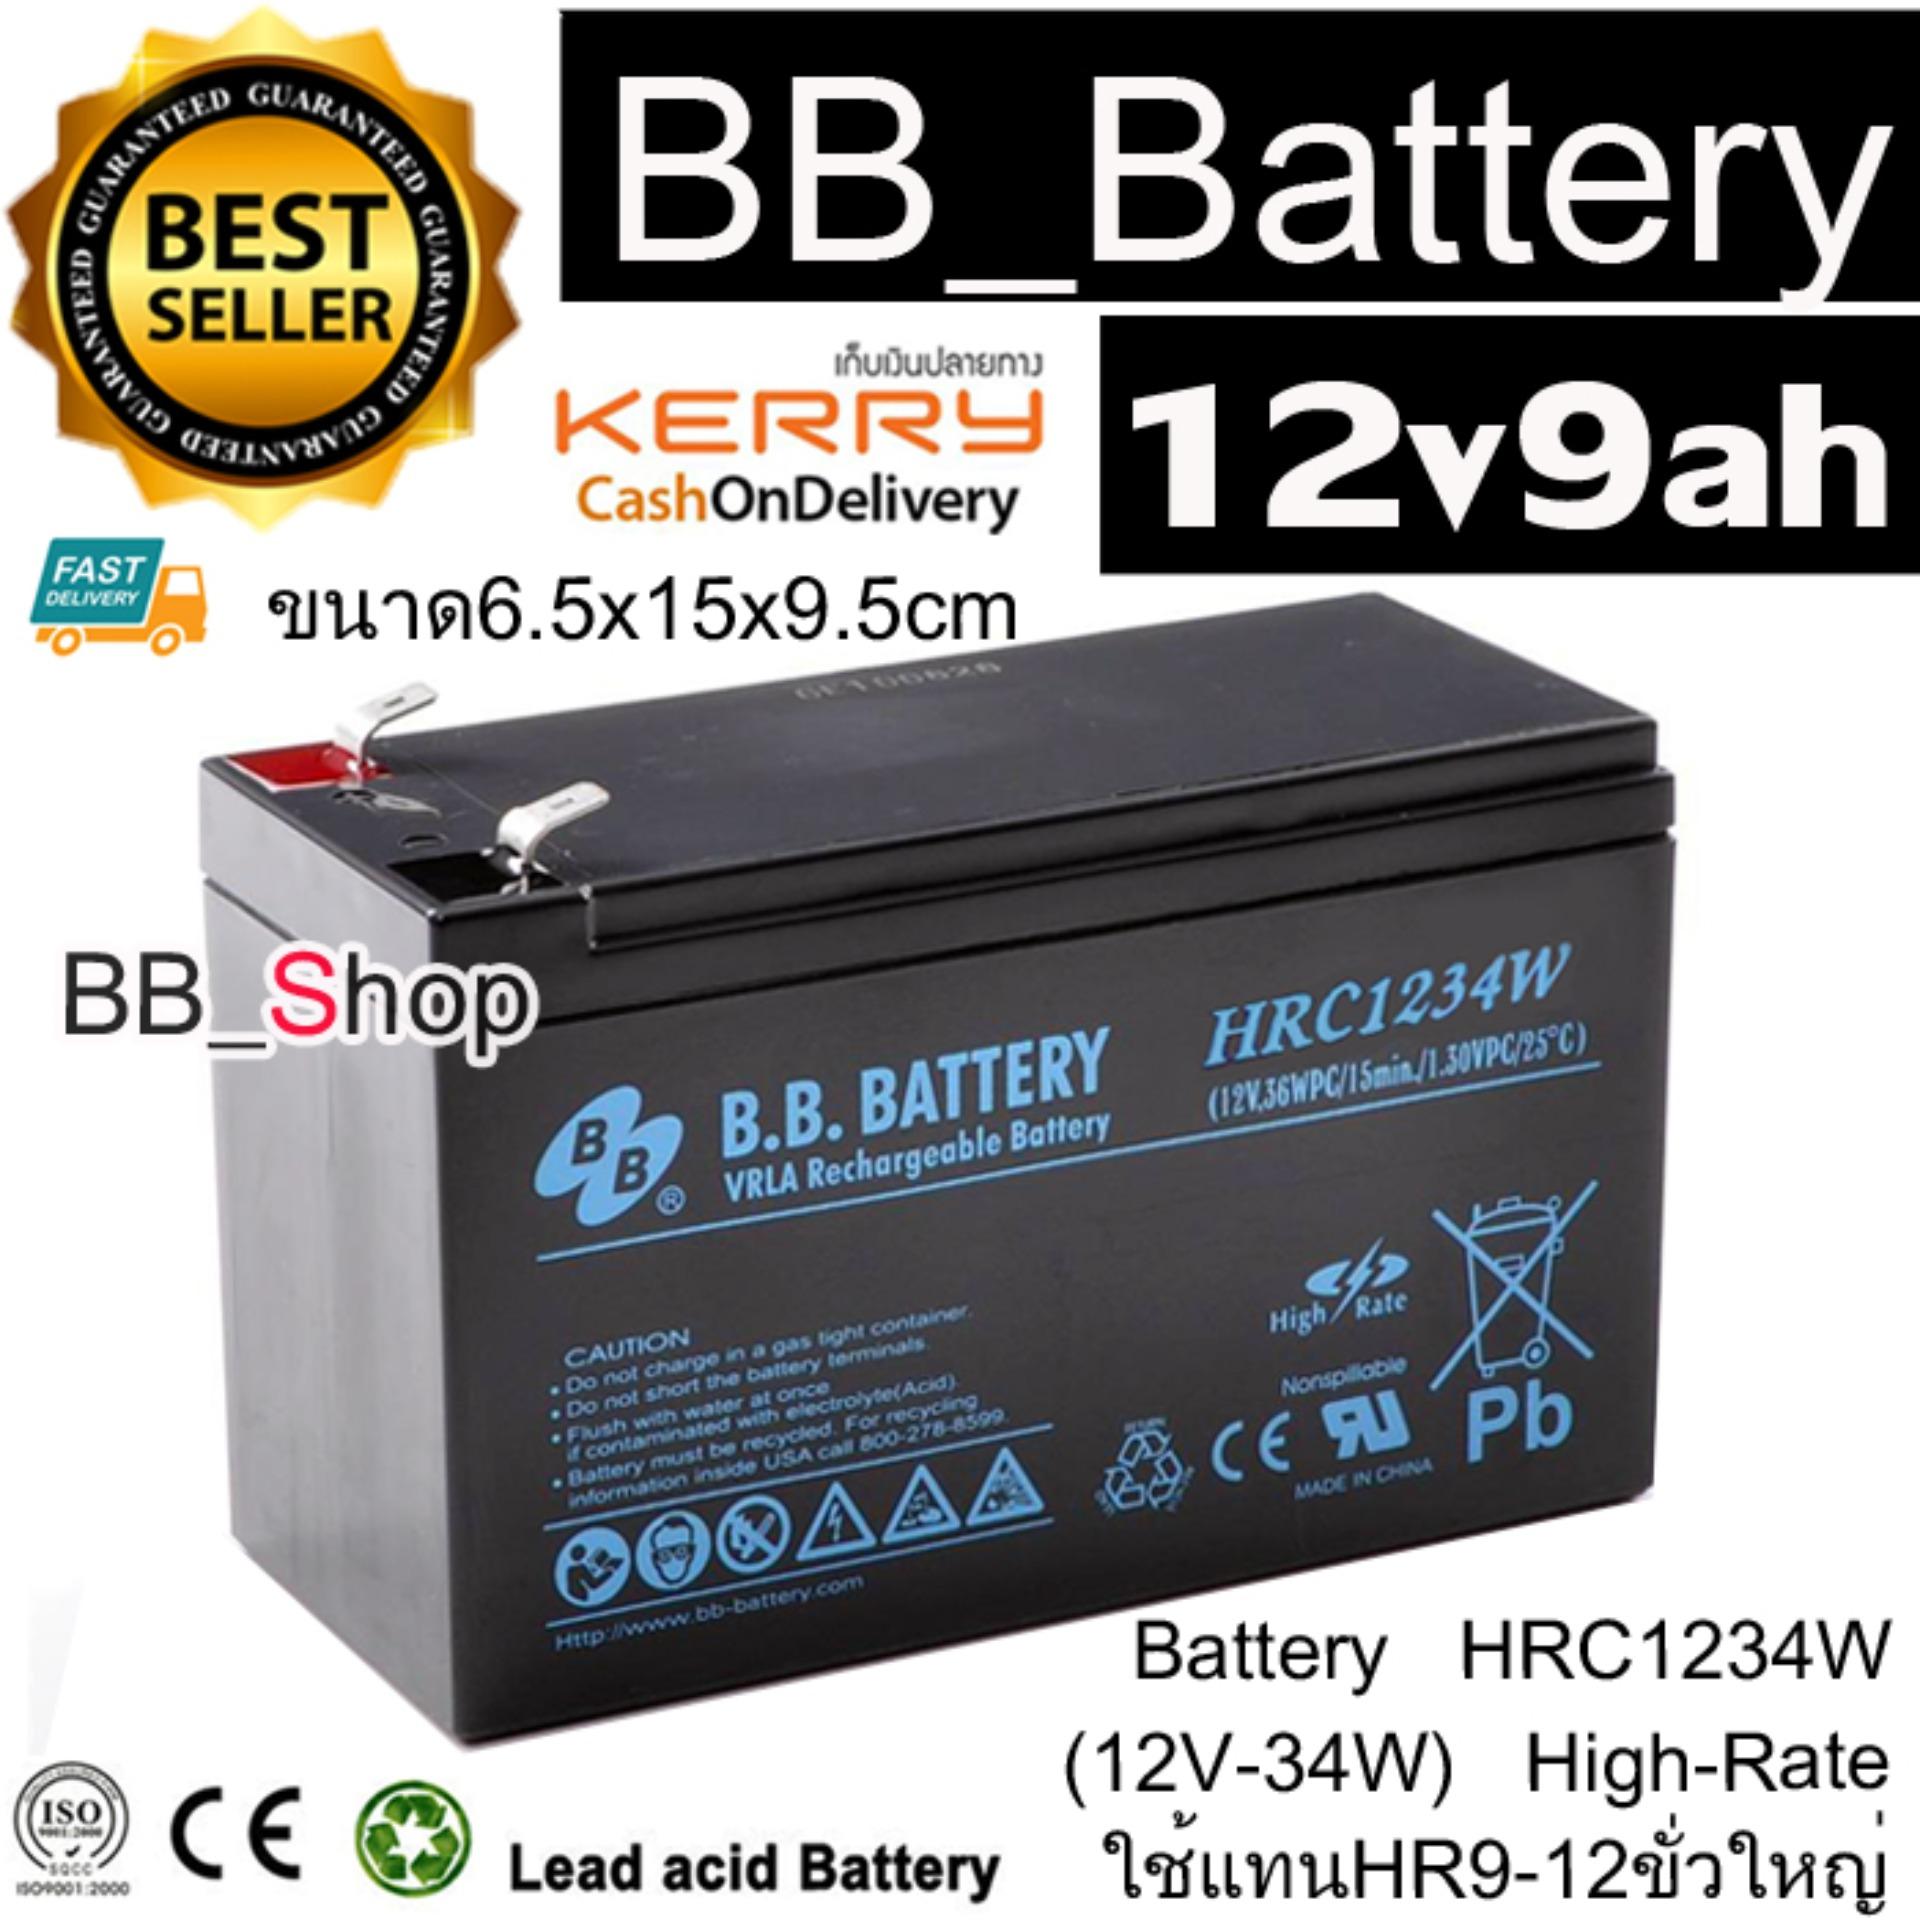 BB Battery UPS แบตเตอรี่ยูพีเอส แบตเตอรี่แห้ง 12v9ah(12v34w) รุ่น HRC1234W ใช้แทน HR9-12 High Rate